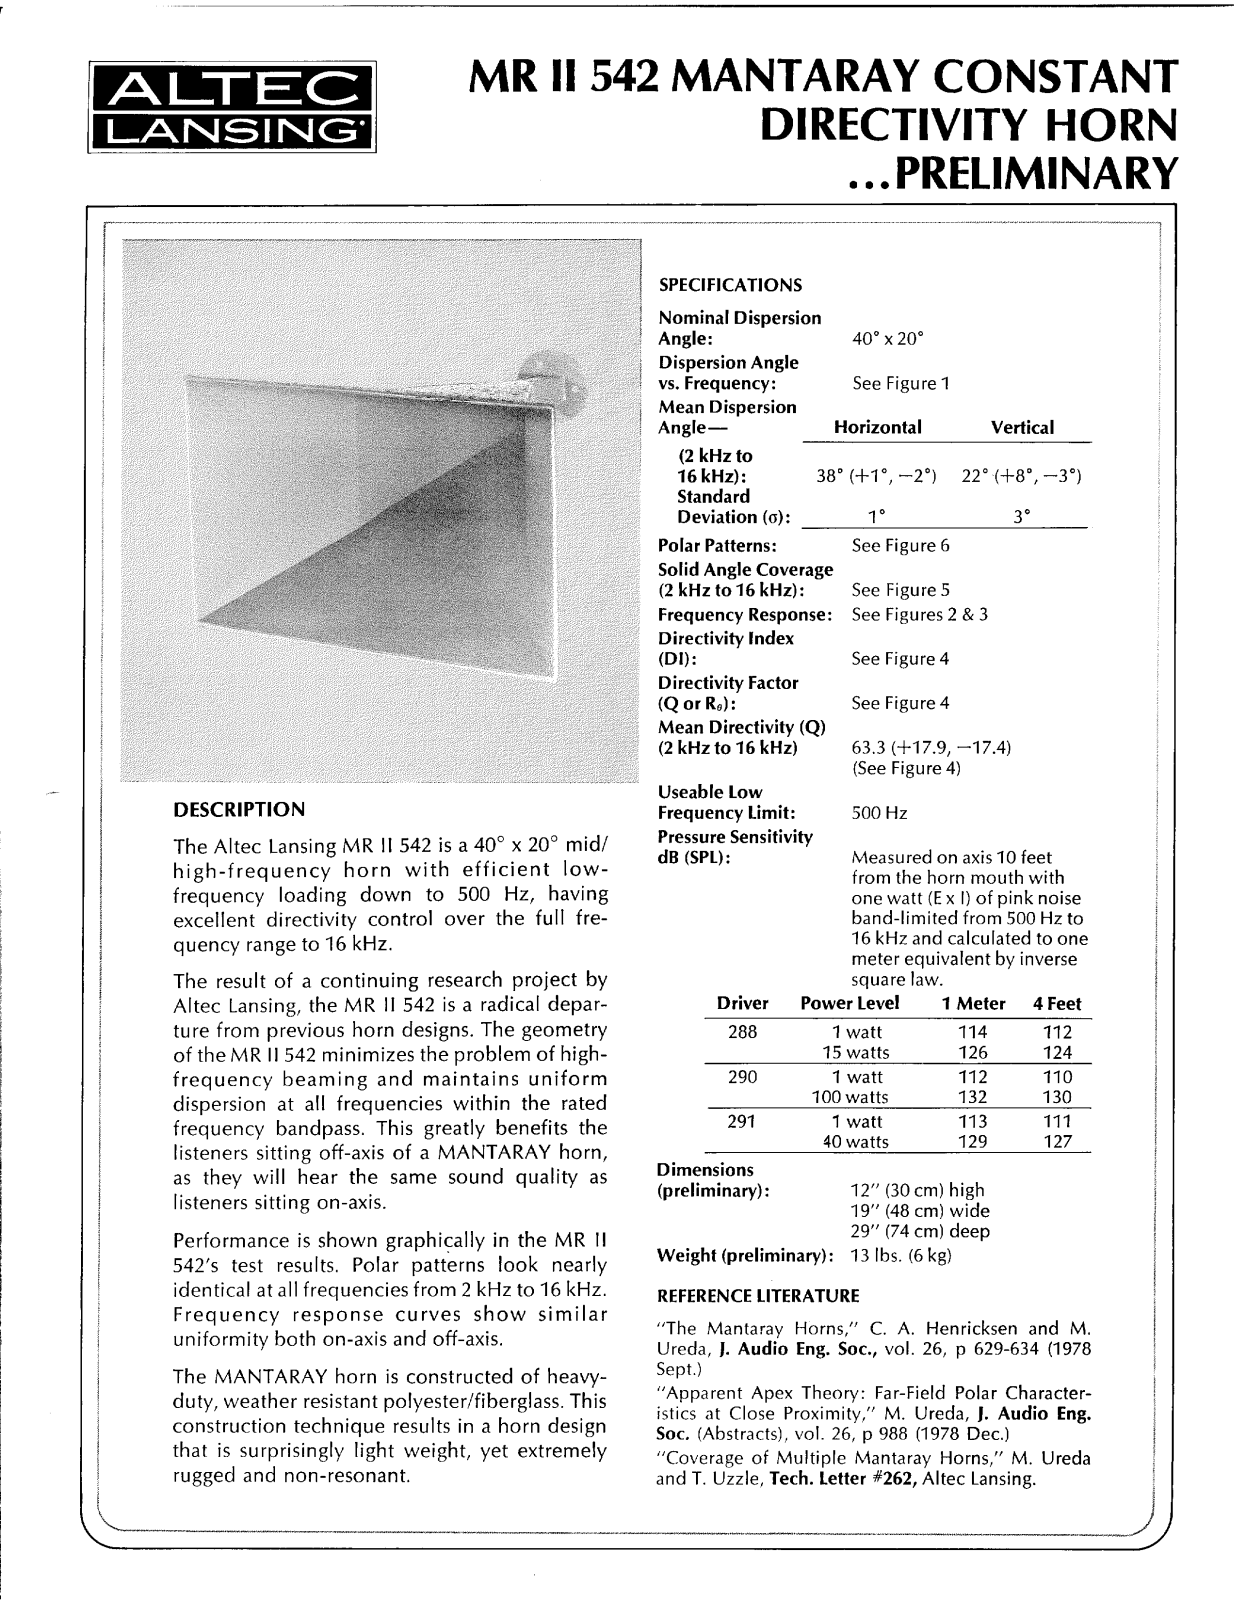 Altec lansing MRII542 HF HORN User Manual